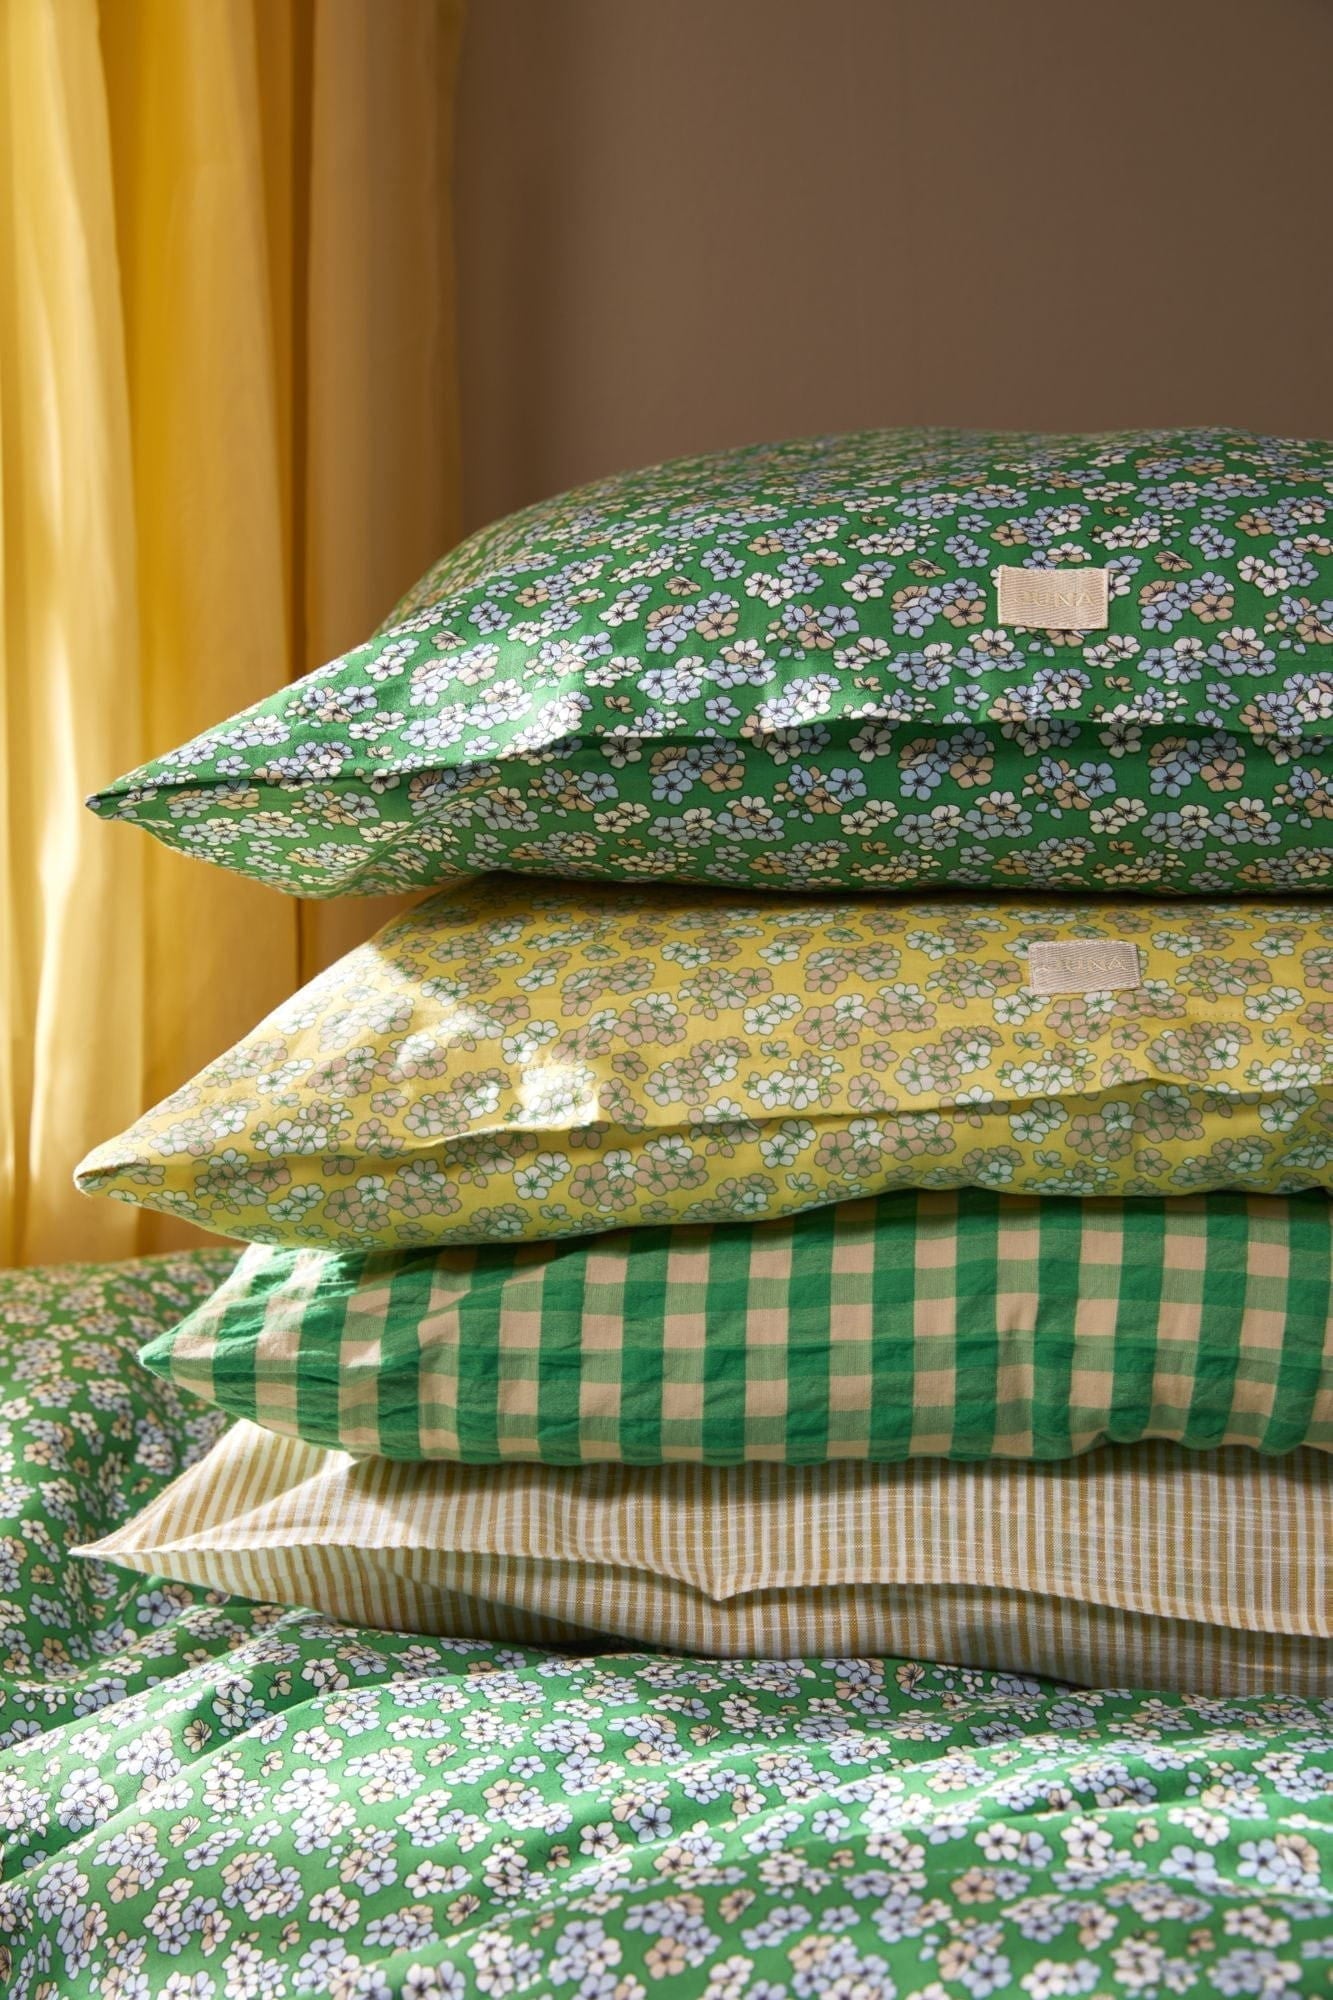 JUNA Behagligt sängkläder 200x220 cm, grönt